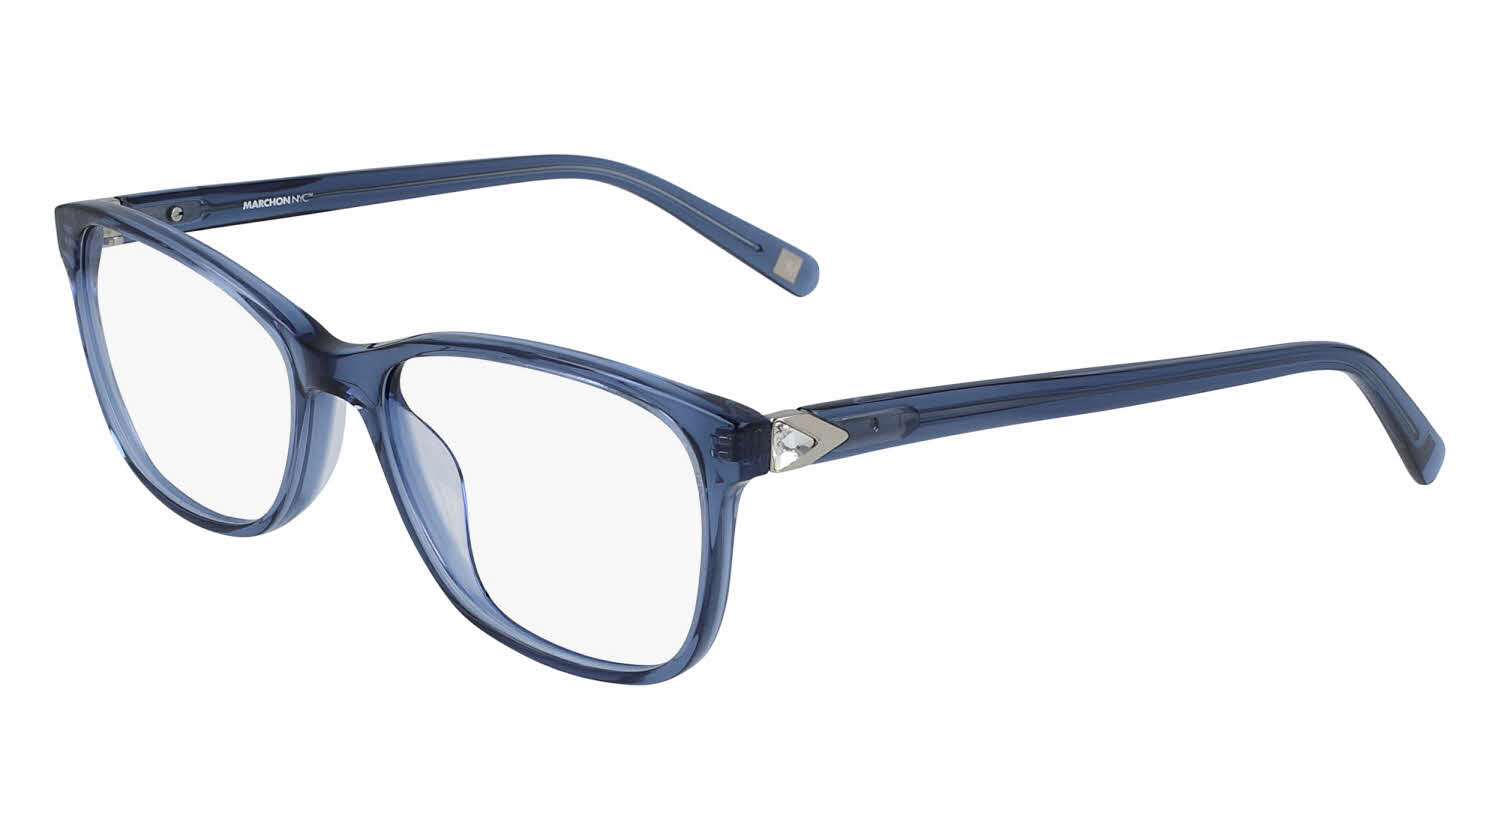 Marchon M-5006 Eyeglasses